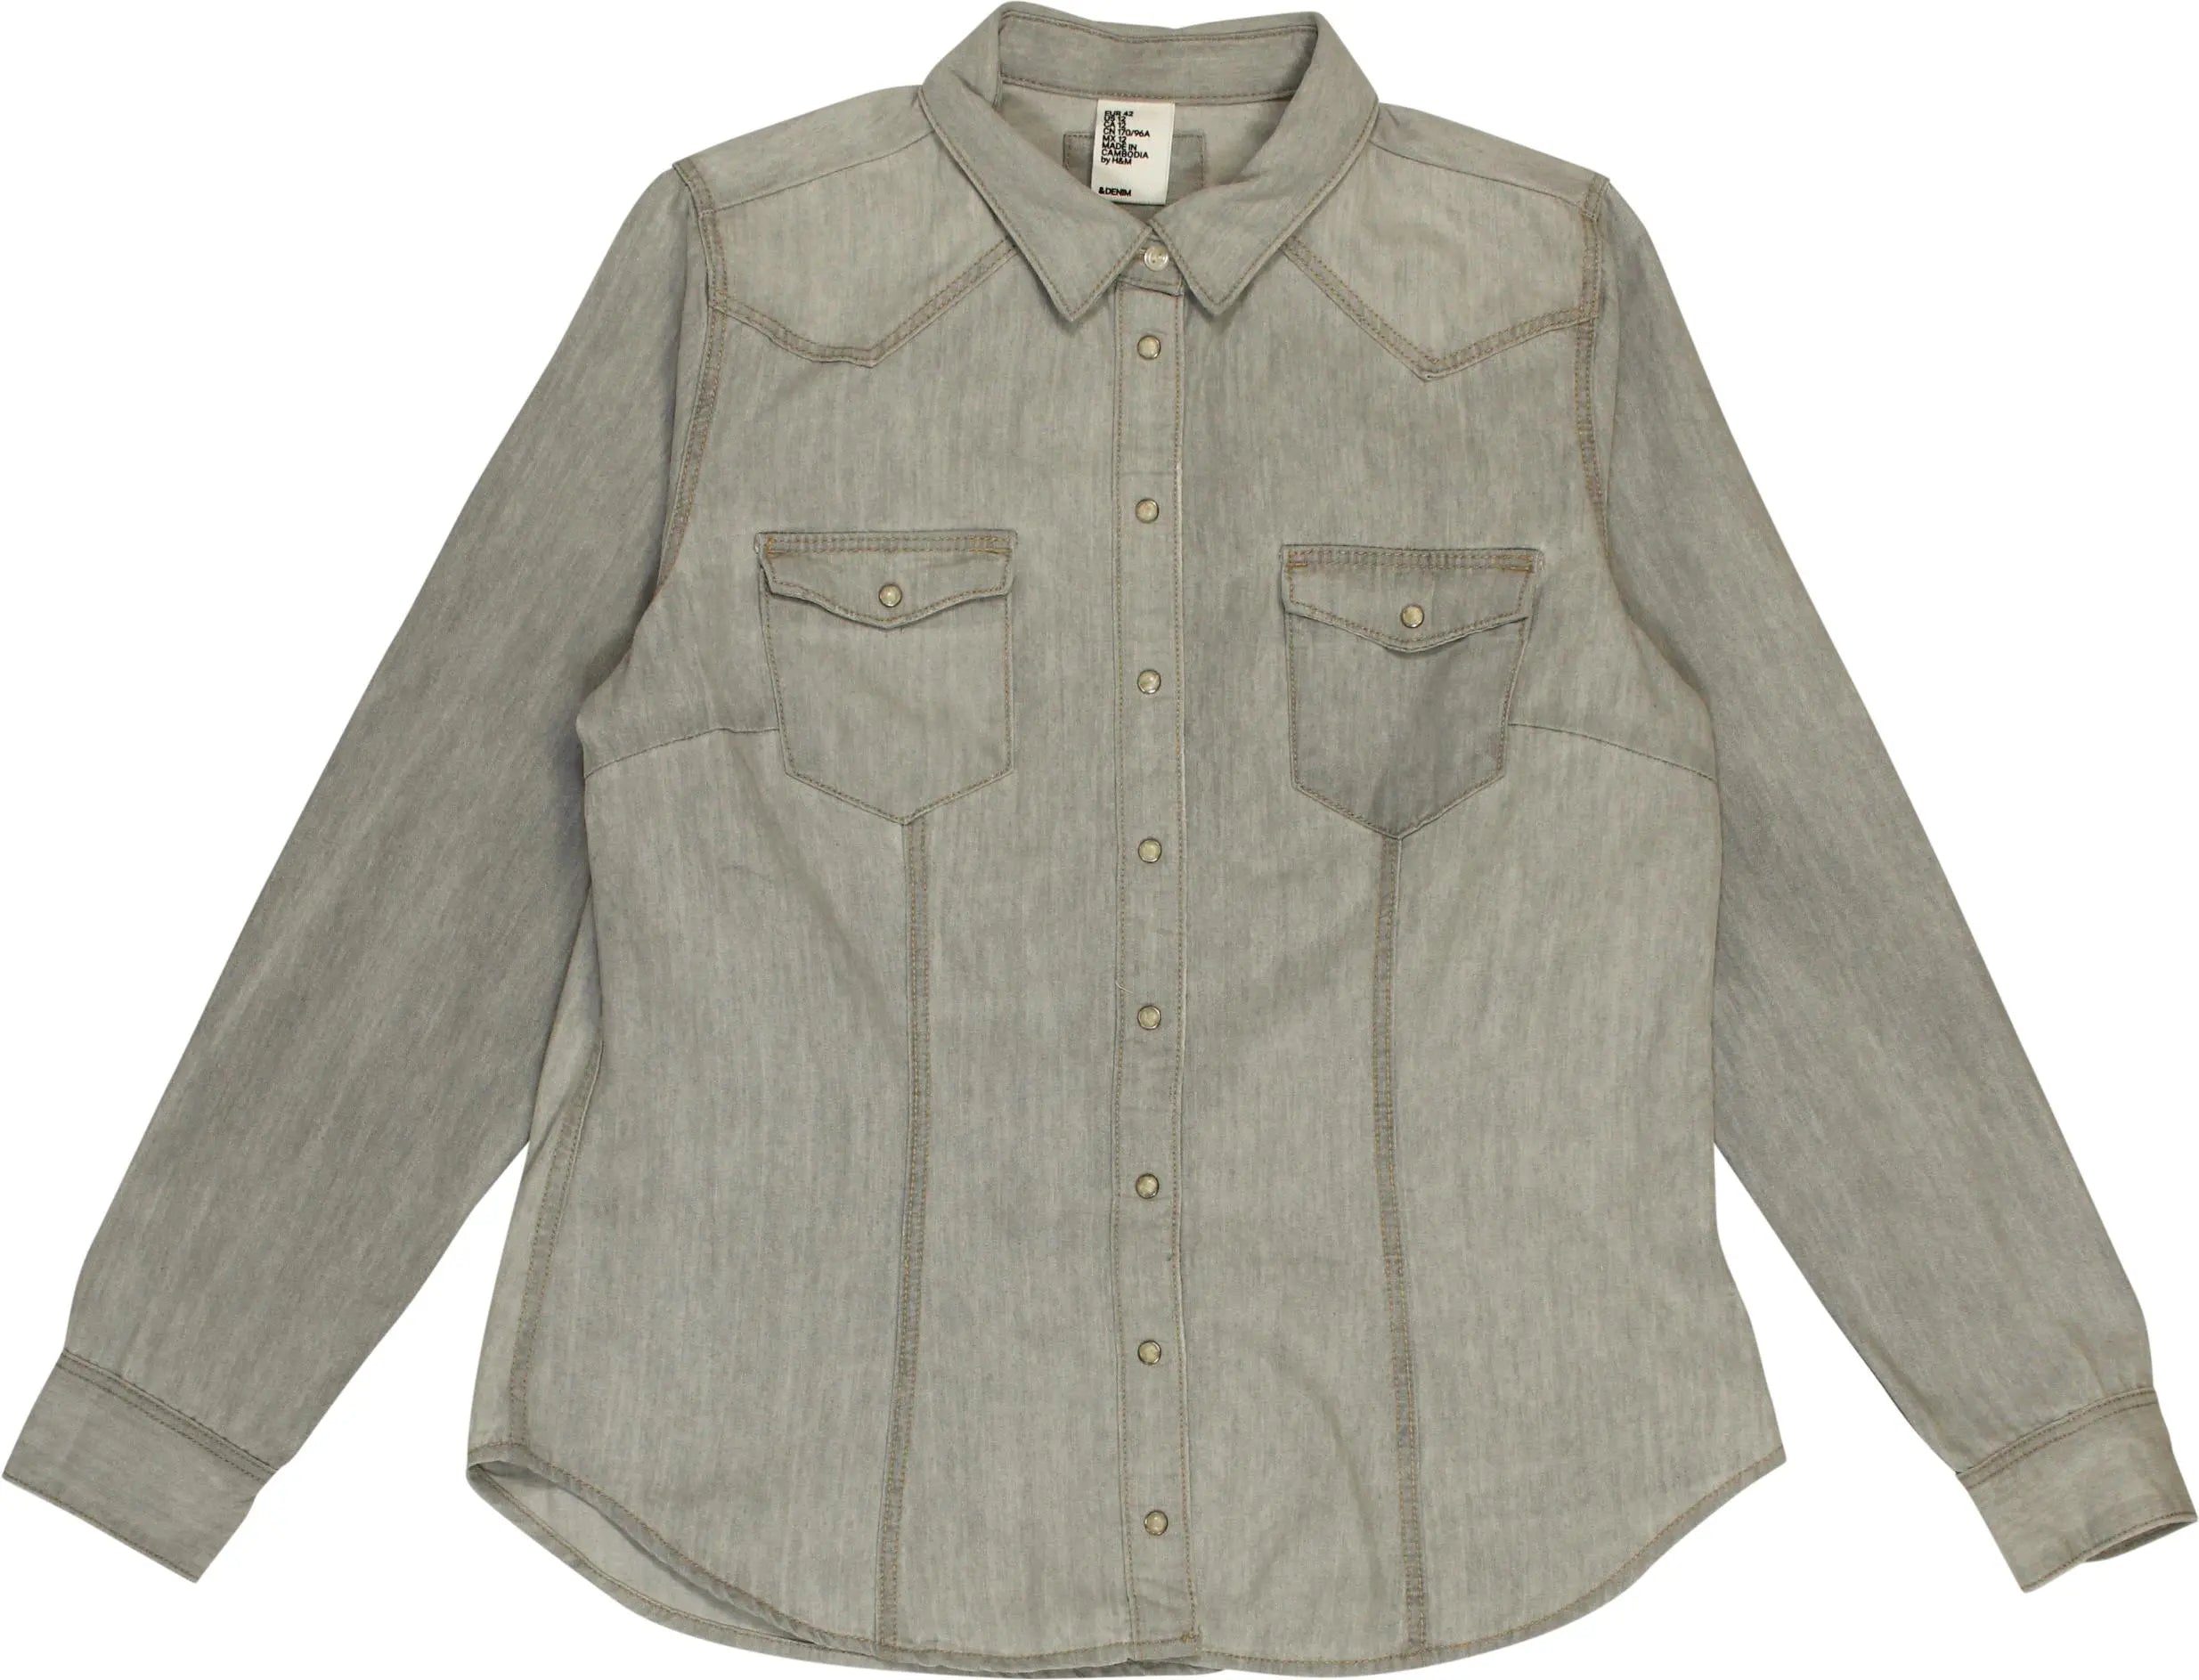 H&M - Denim Shirt- ThriftTale.com - Vintage and second handclothing